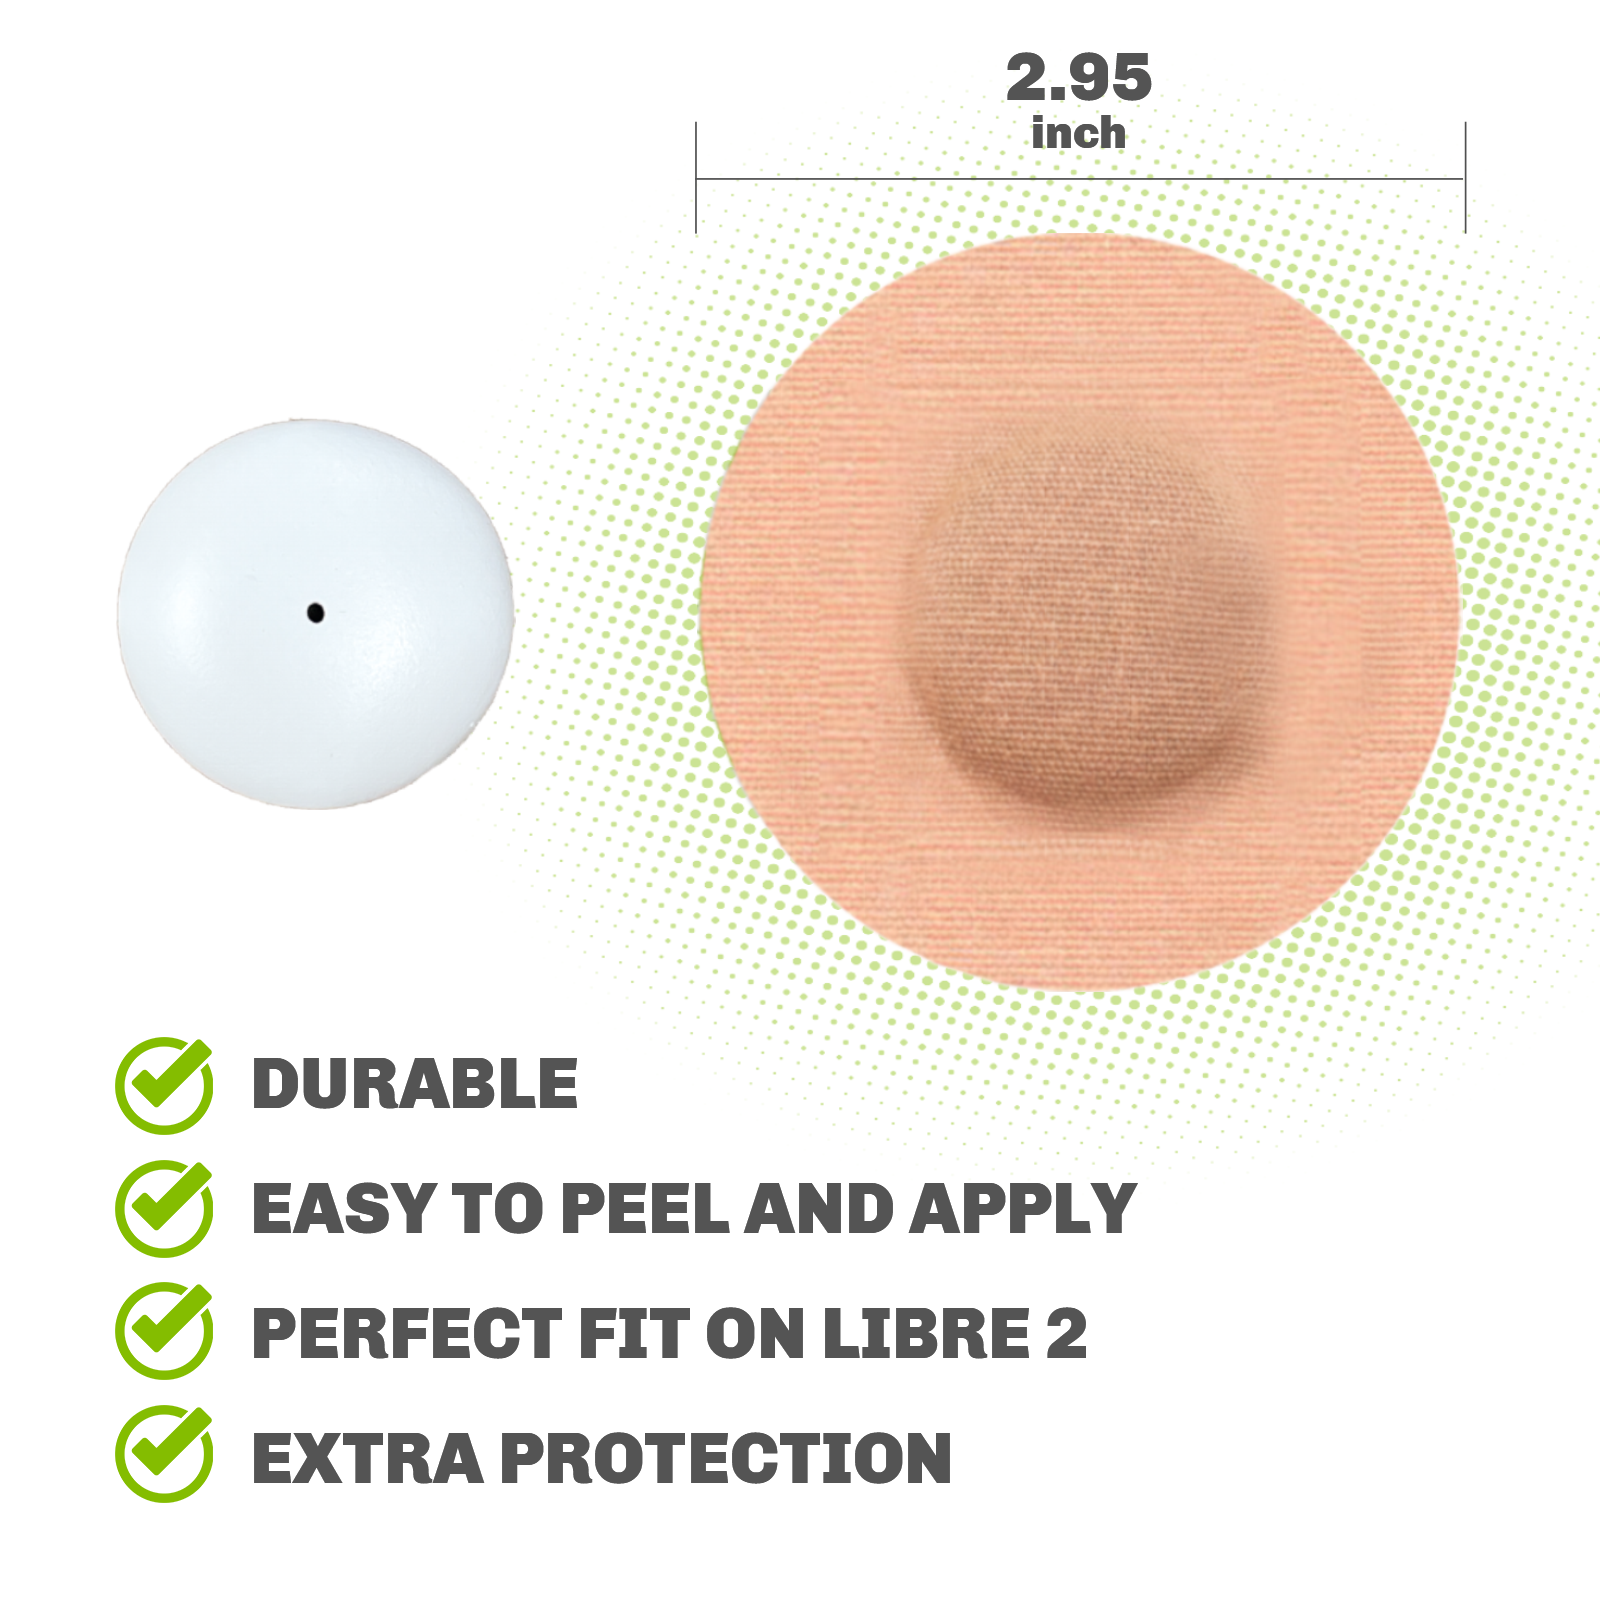 Peelz Dexcom G6 Adhesive Patches 25 Pack - US-Made Waterproof CGM